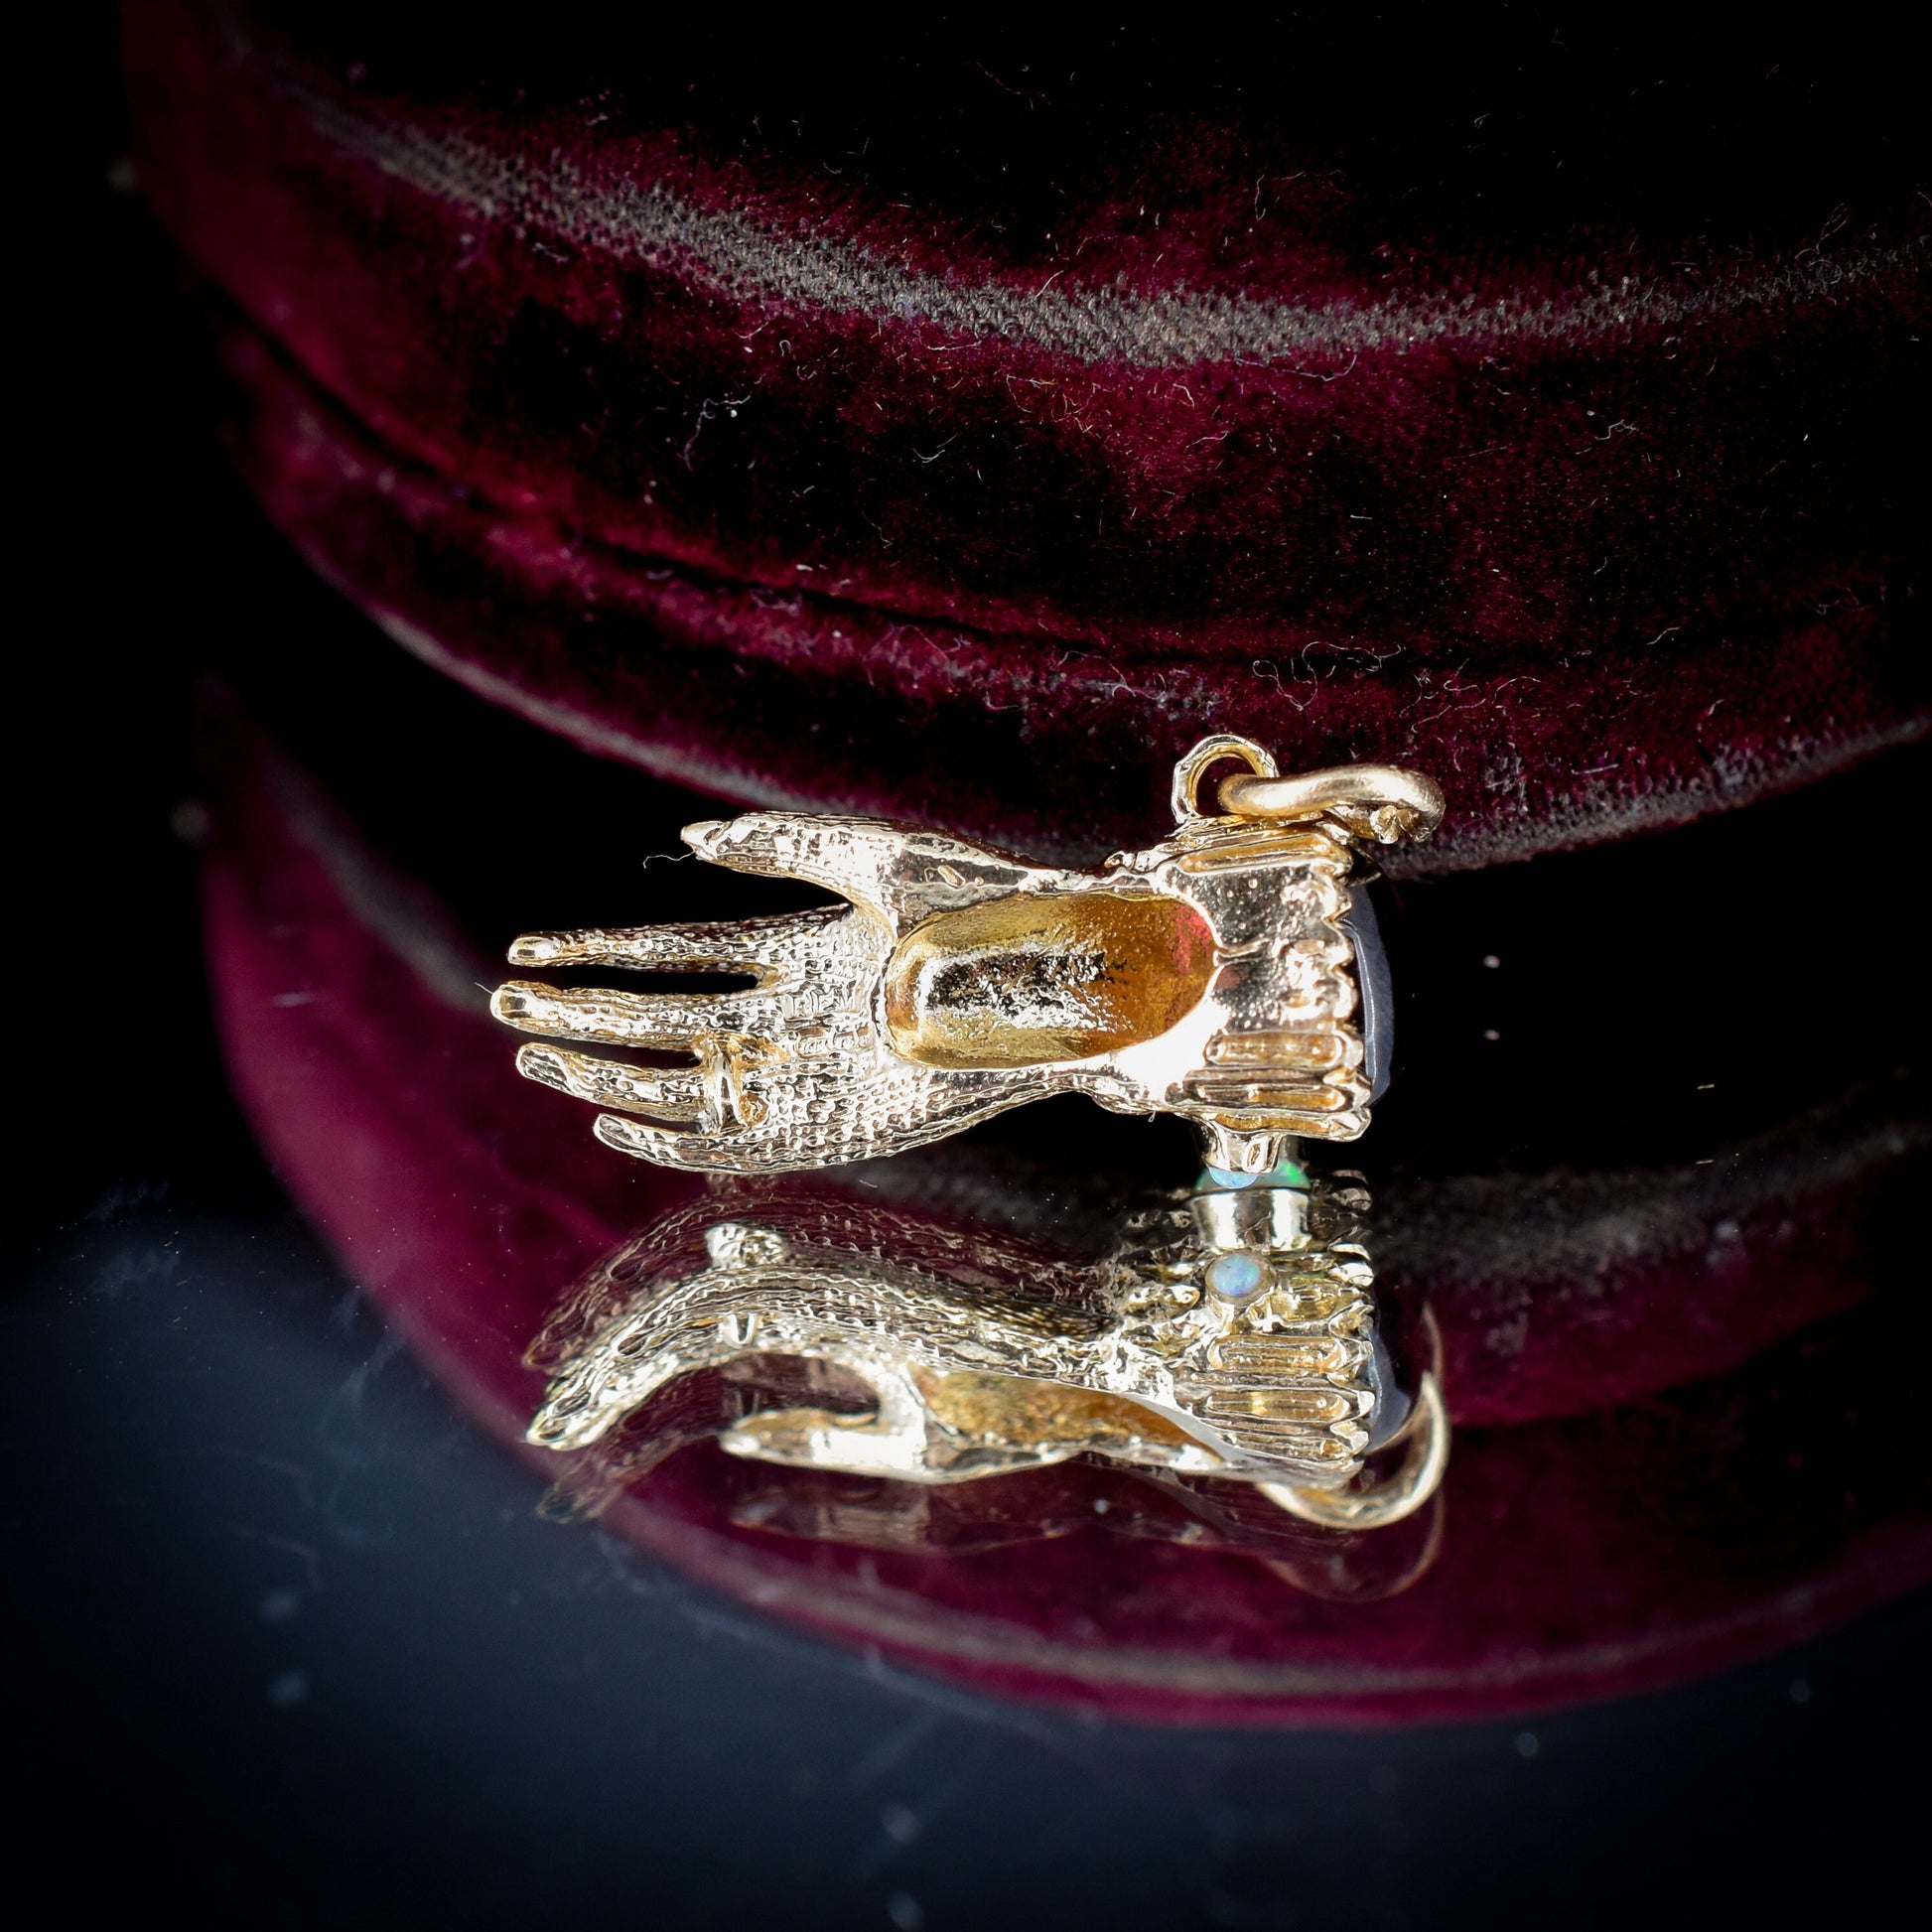 Opal and Garnet Yellow Gold Hand Figa Charm Pendant